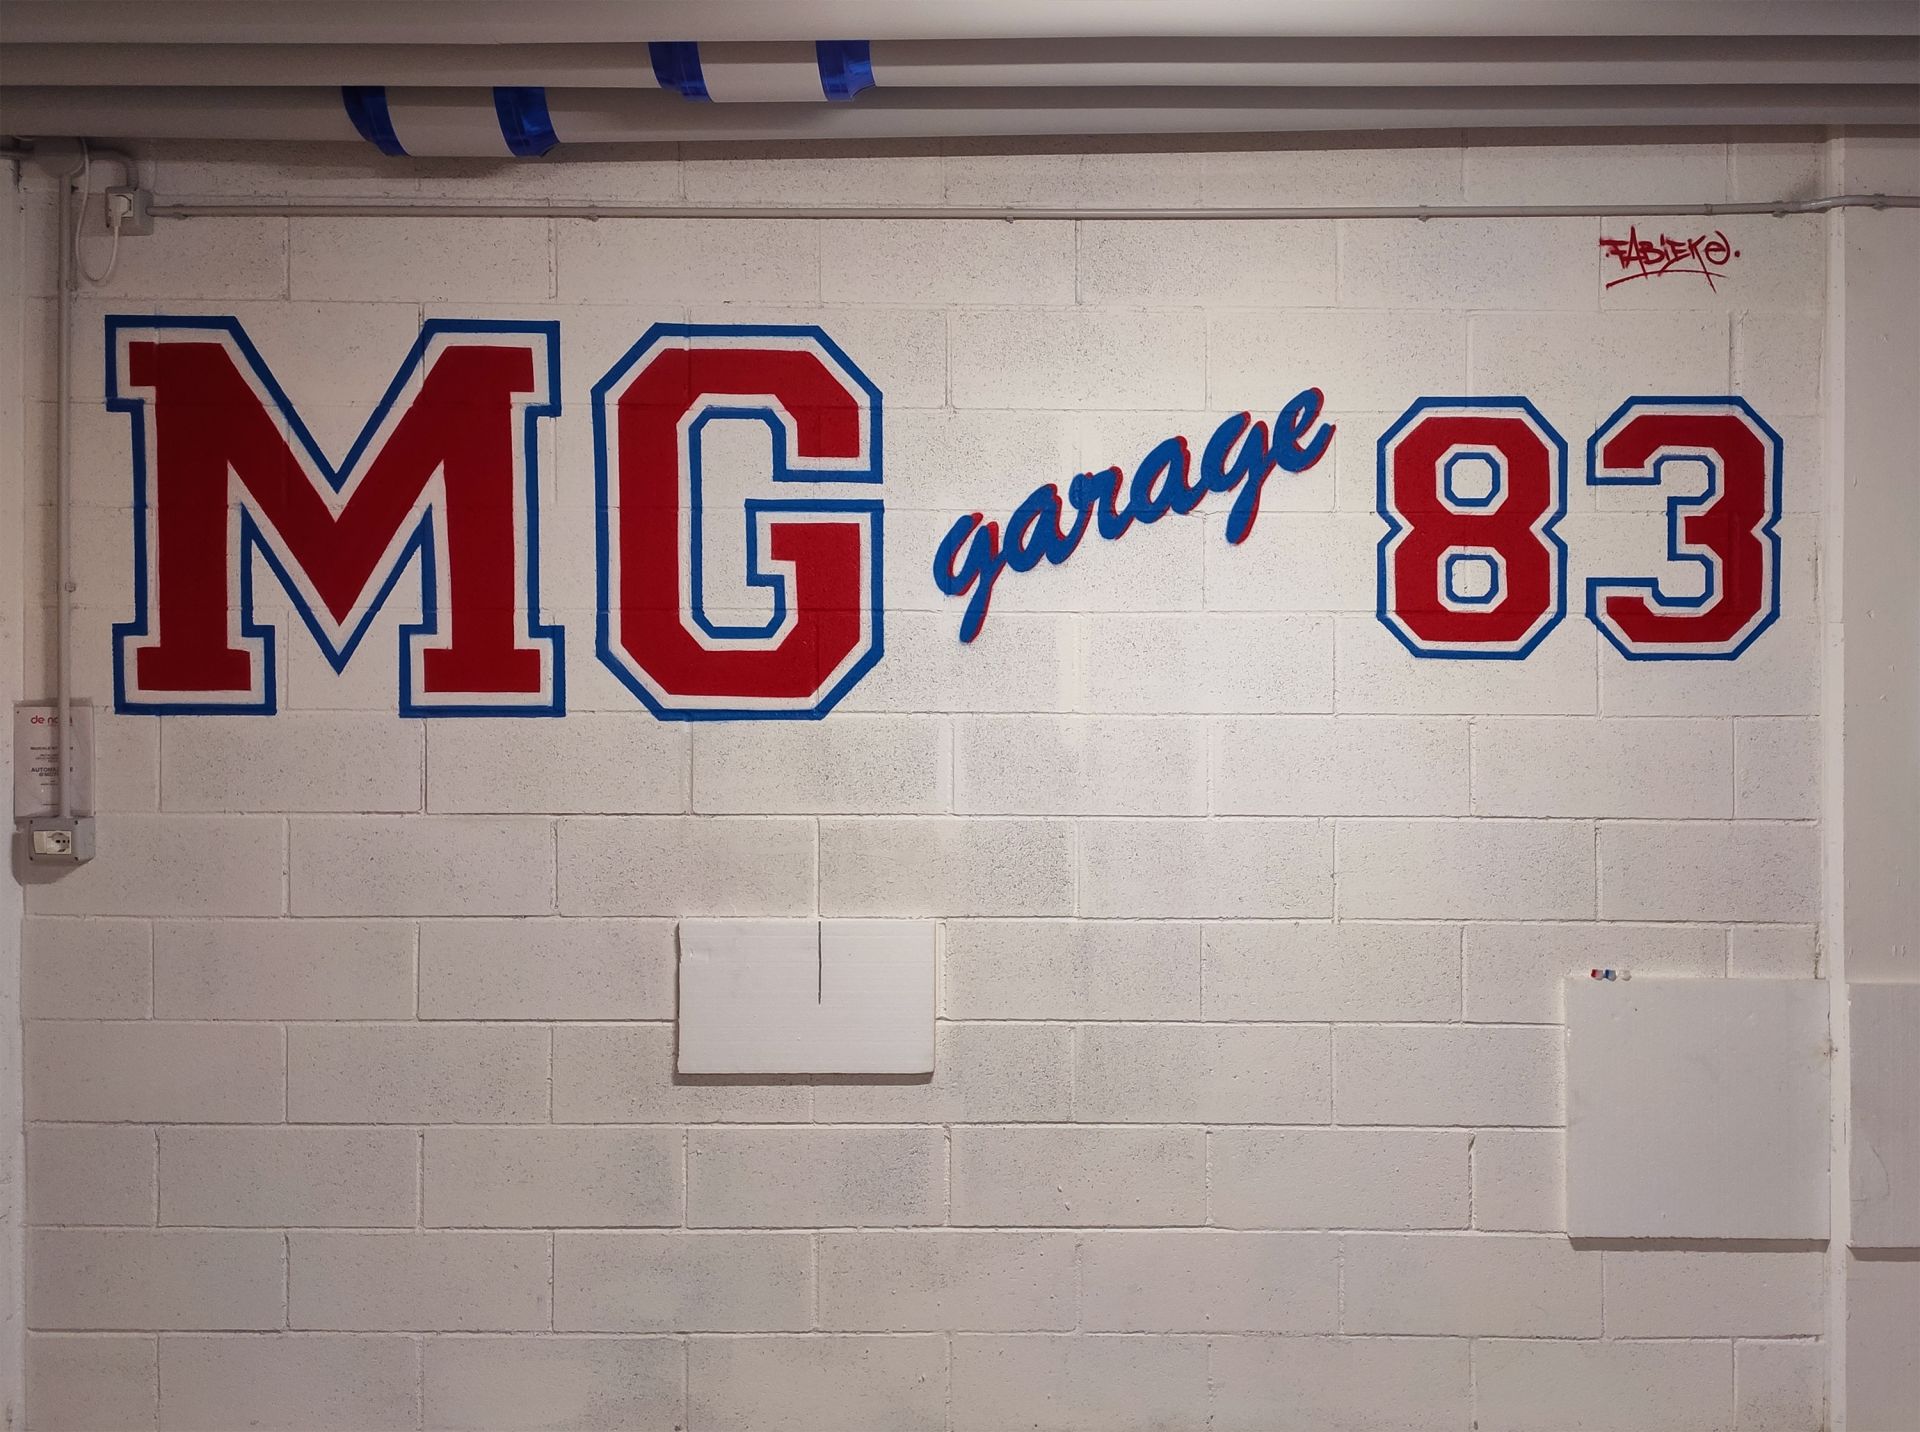 MG garage